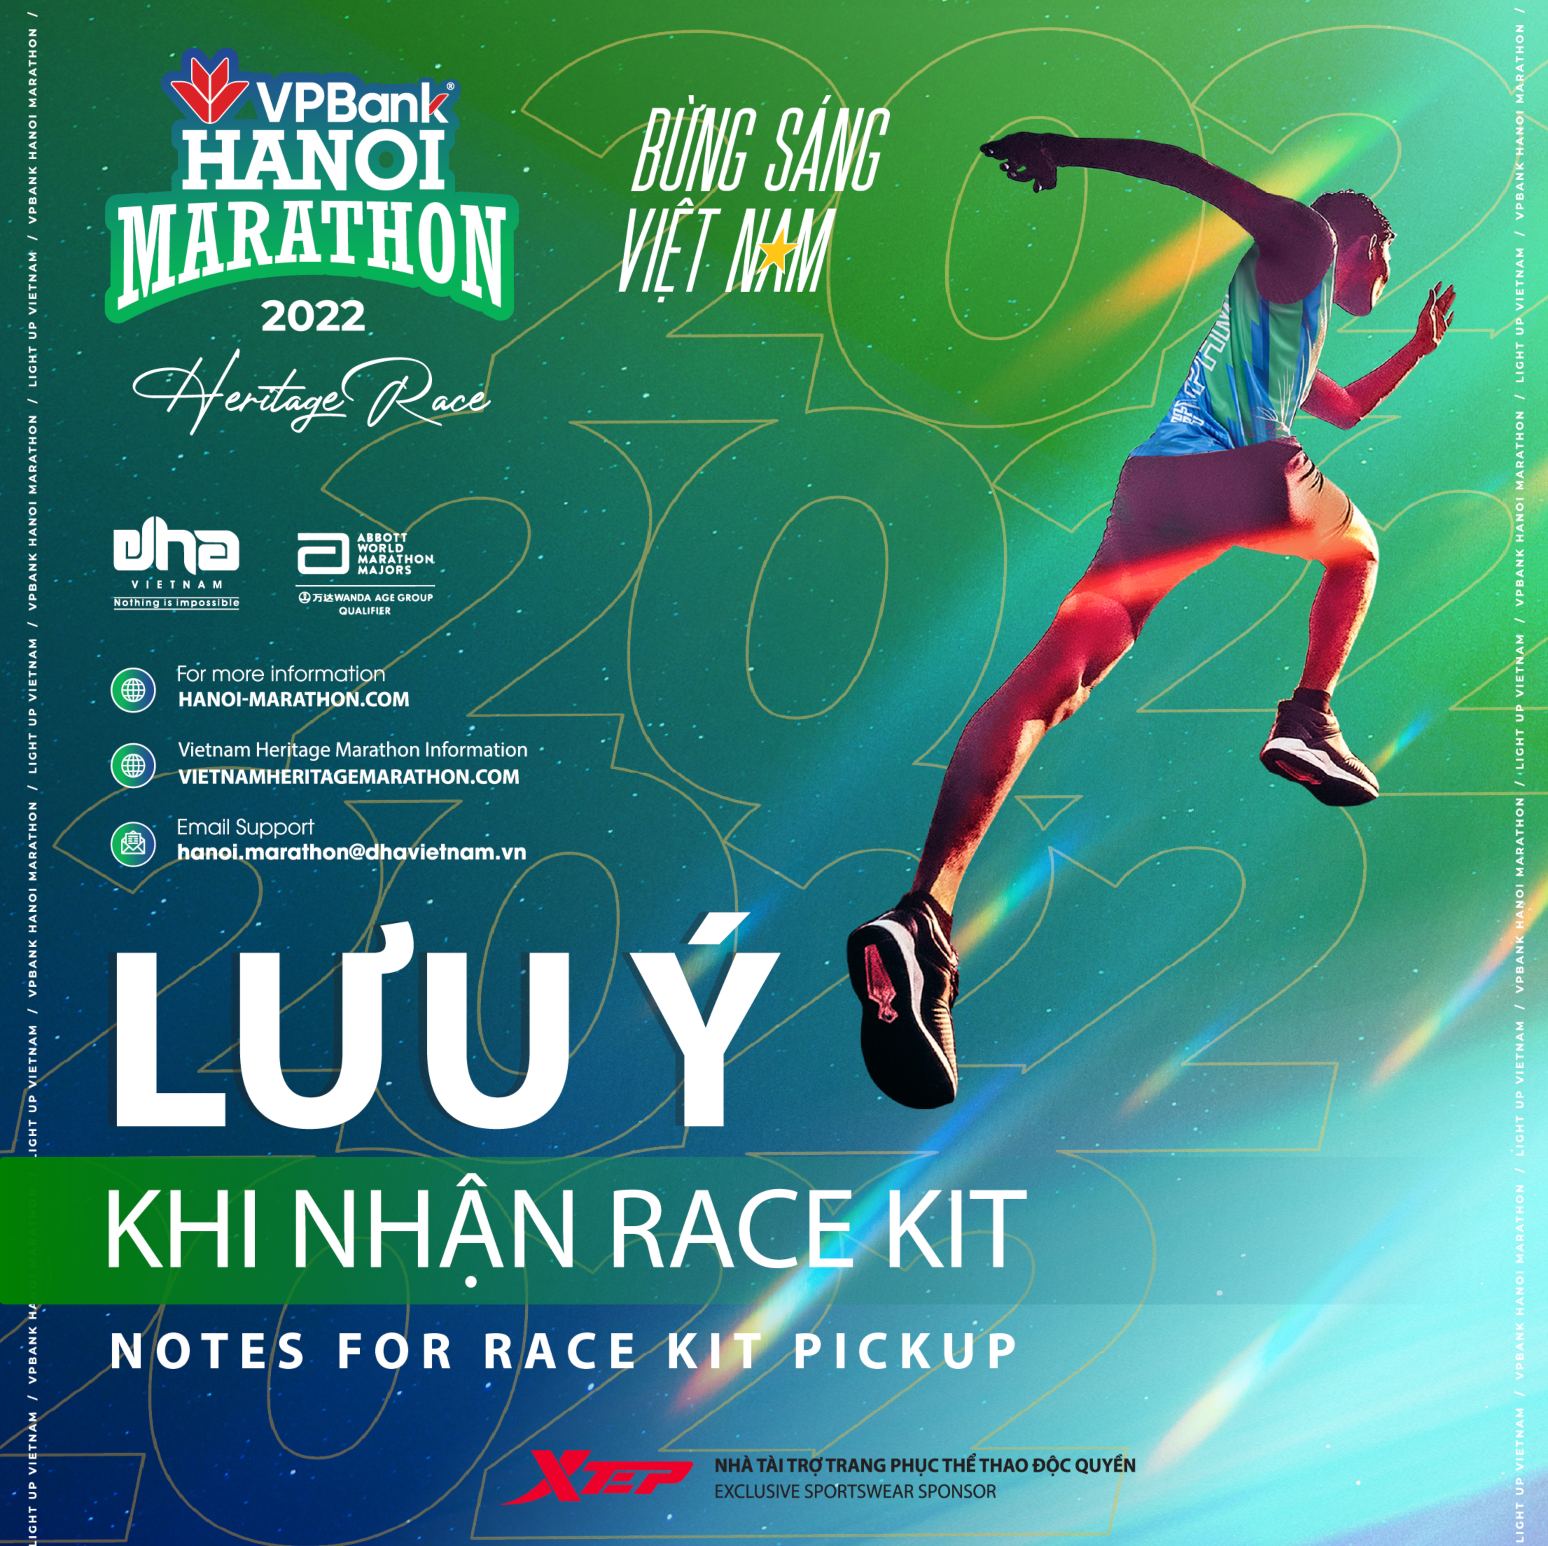 VPBank Hanoi Marathon 2022: Notes For Race Kit Pickup